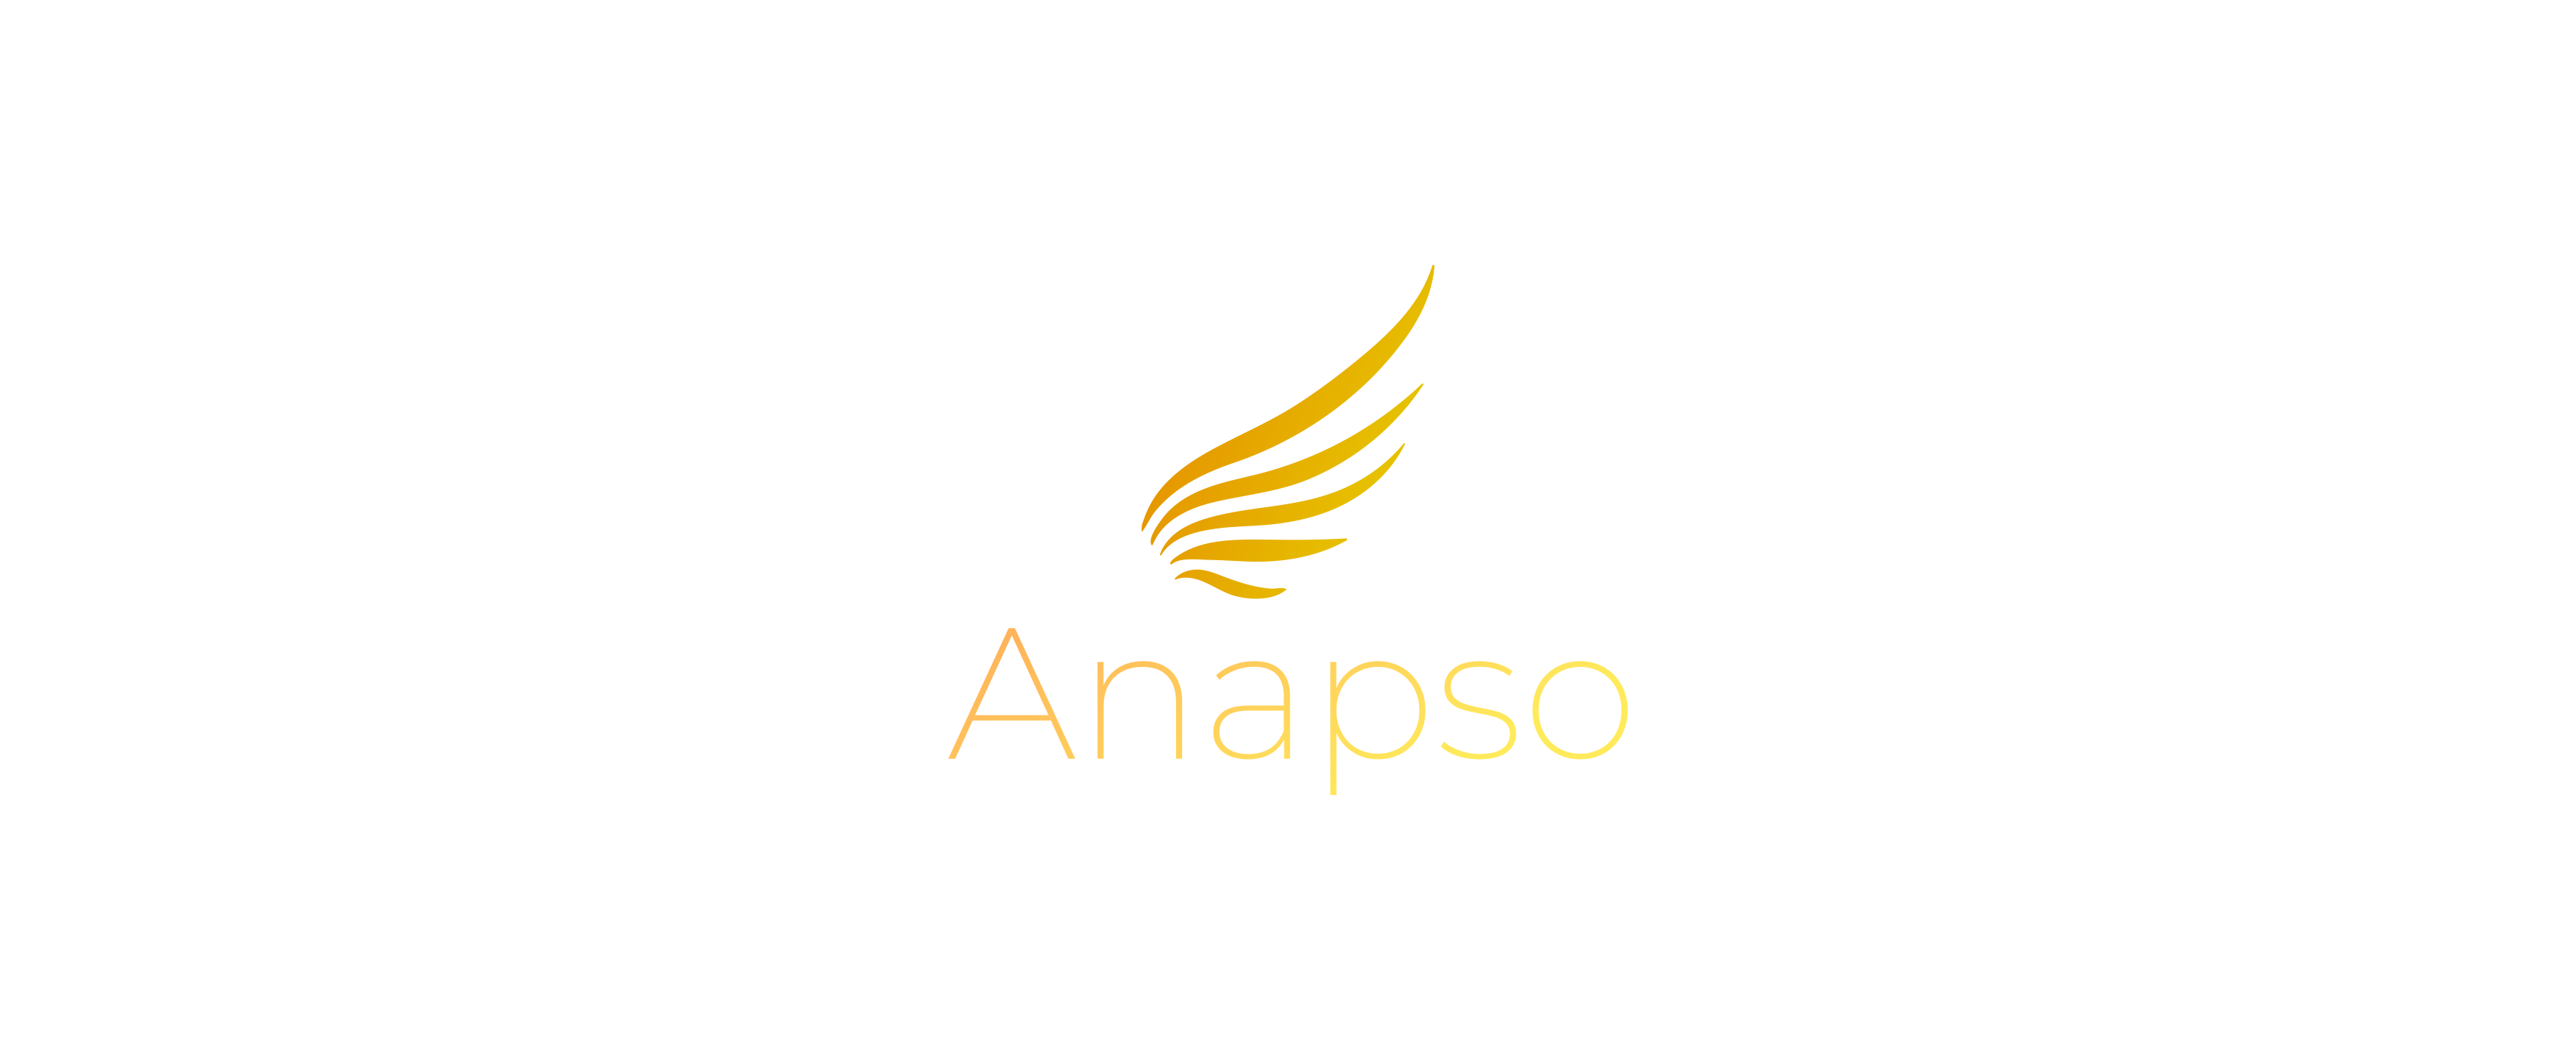 Anapso